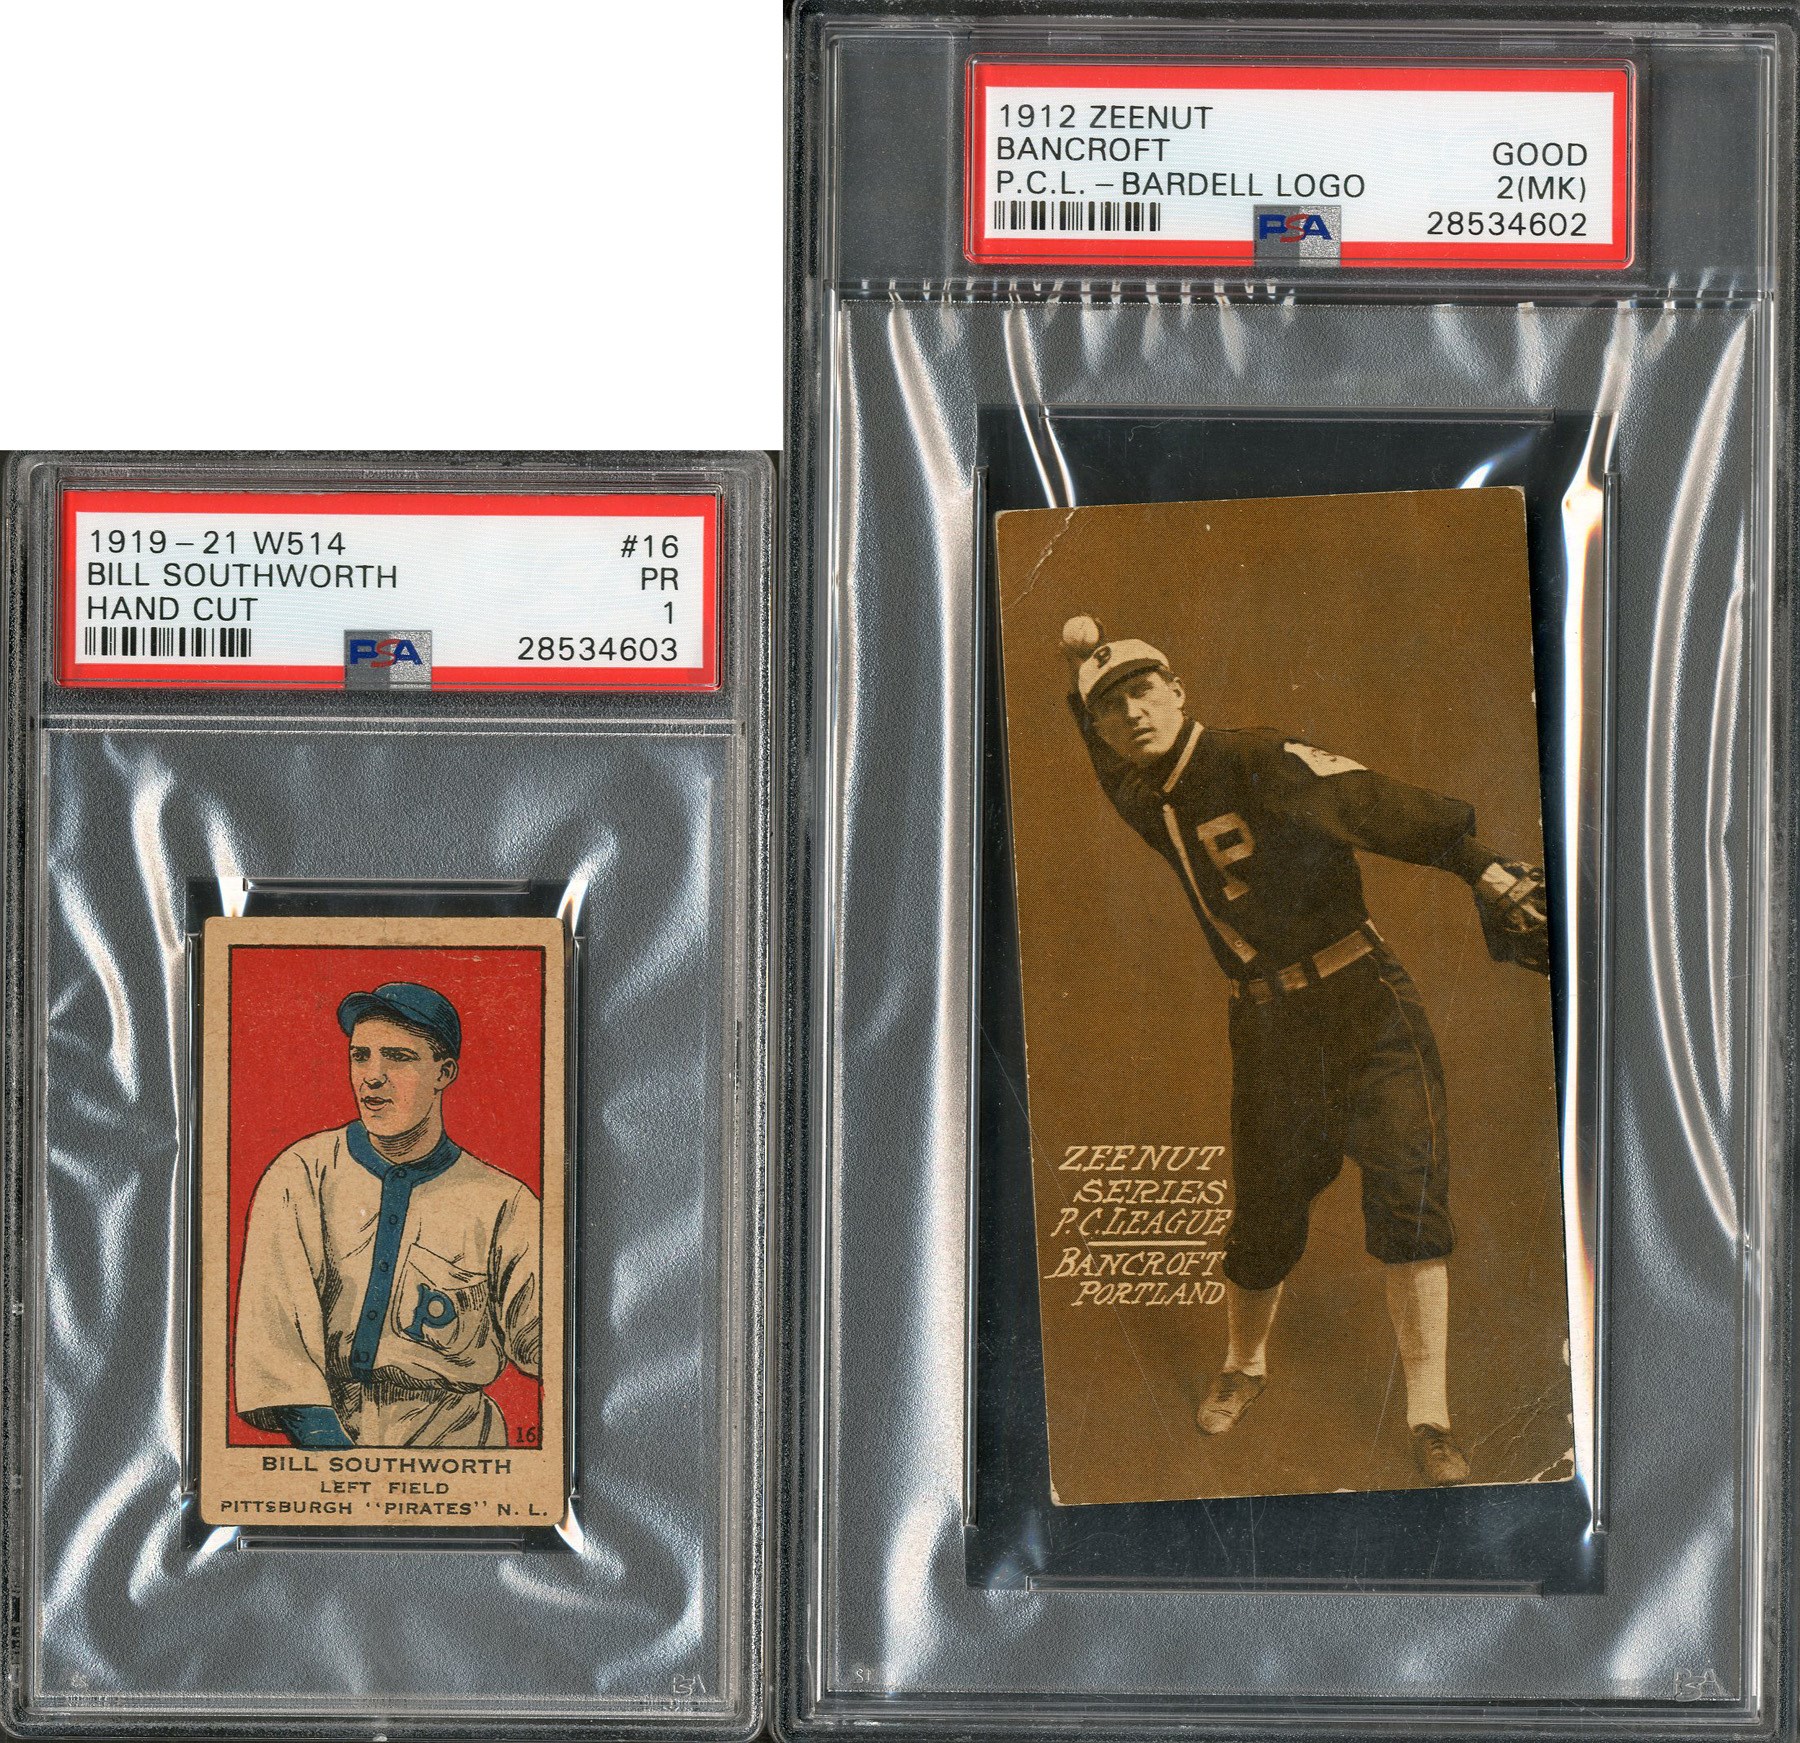 1912 Zeenut Dave Bancroft Rookie & 1919 W514 Bill Southworth (PSA Graded)